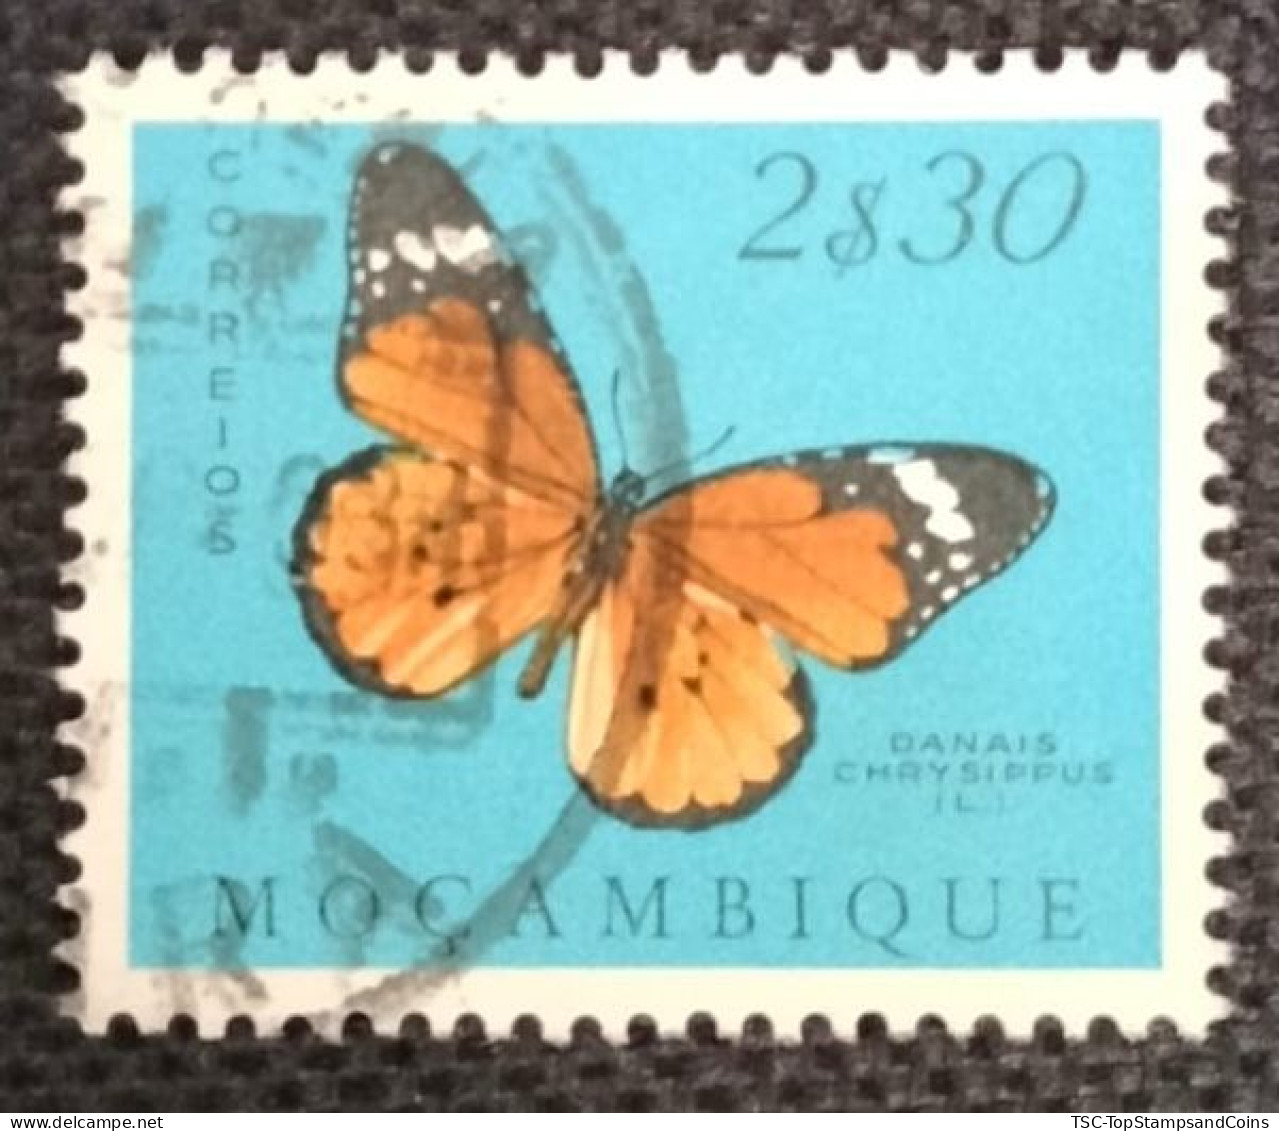 MOZPO0398U9 - Mozambique Butterflies  - 2$30 Used Stamp - Mozambique - 1953 - Mozambique